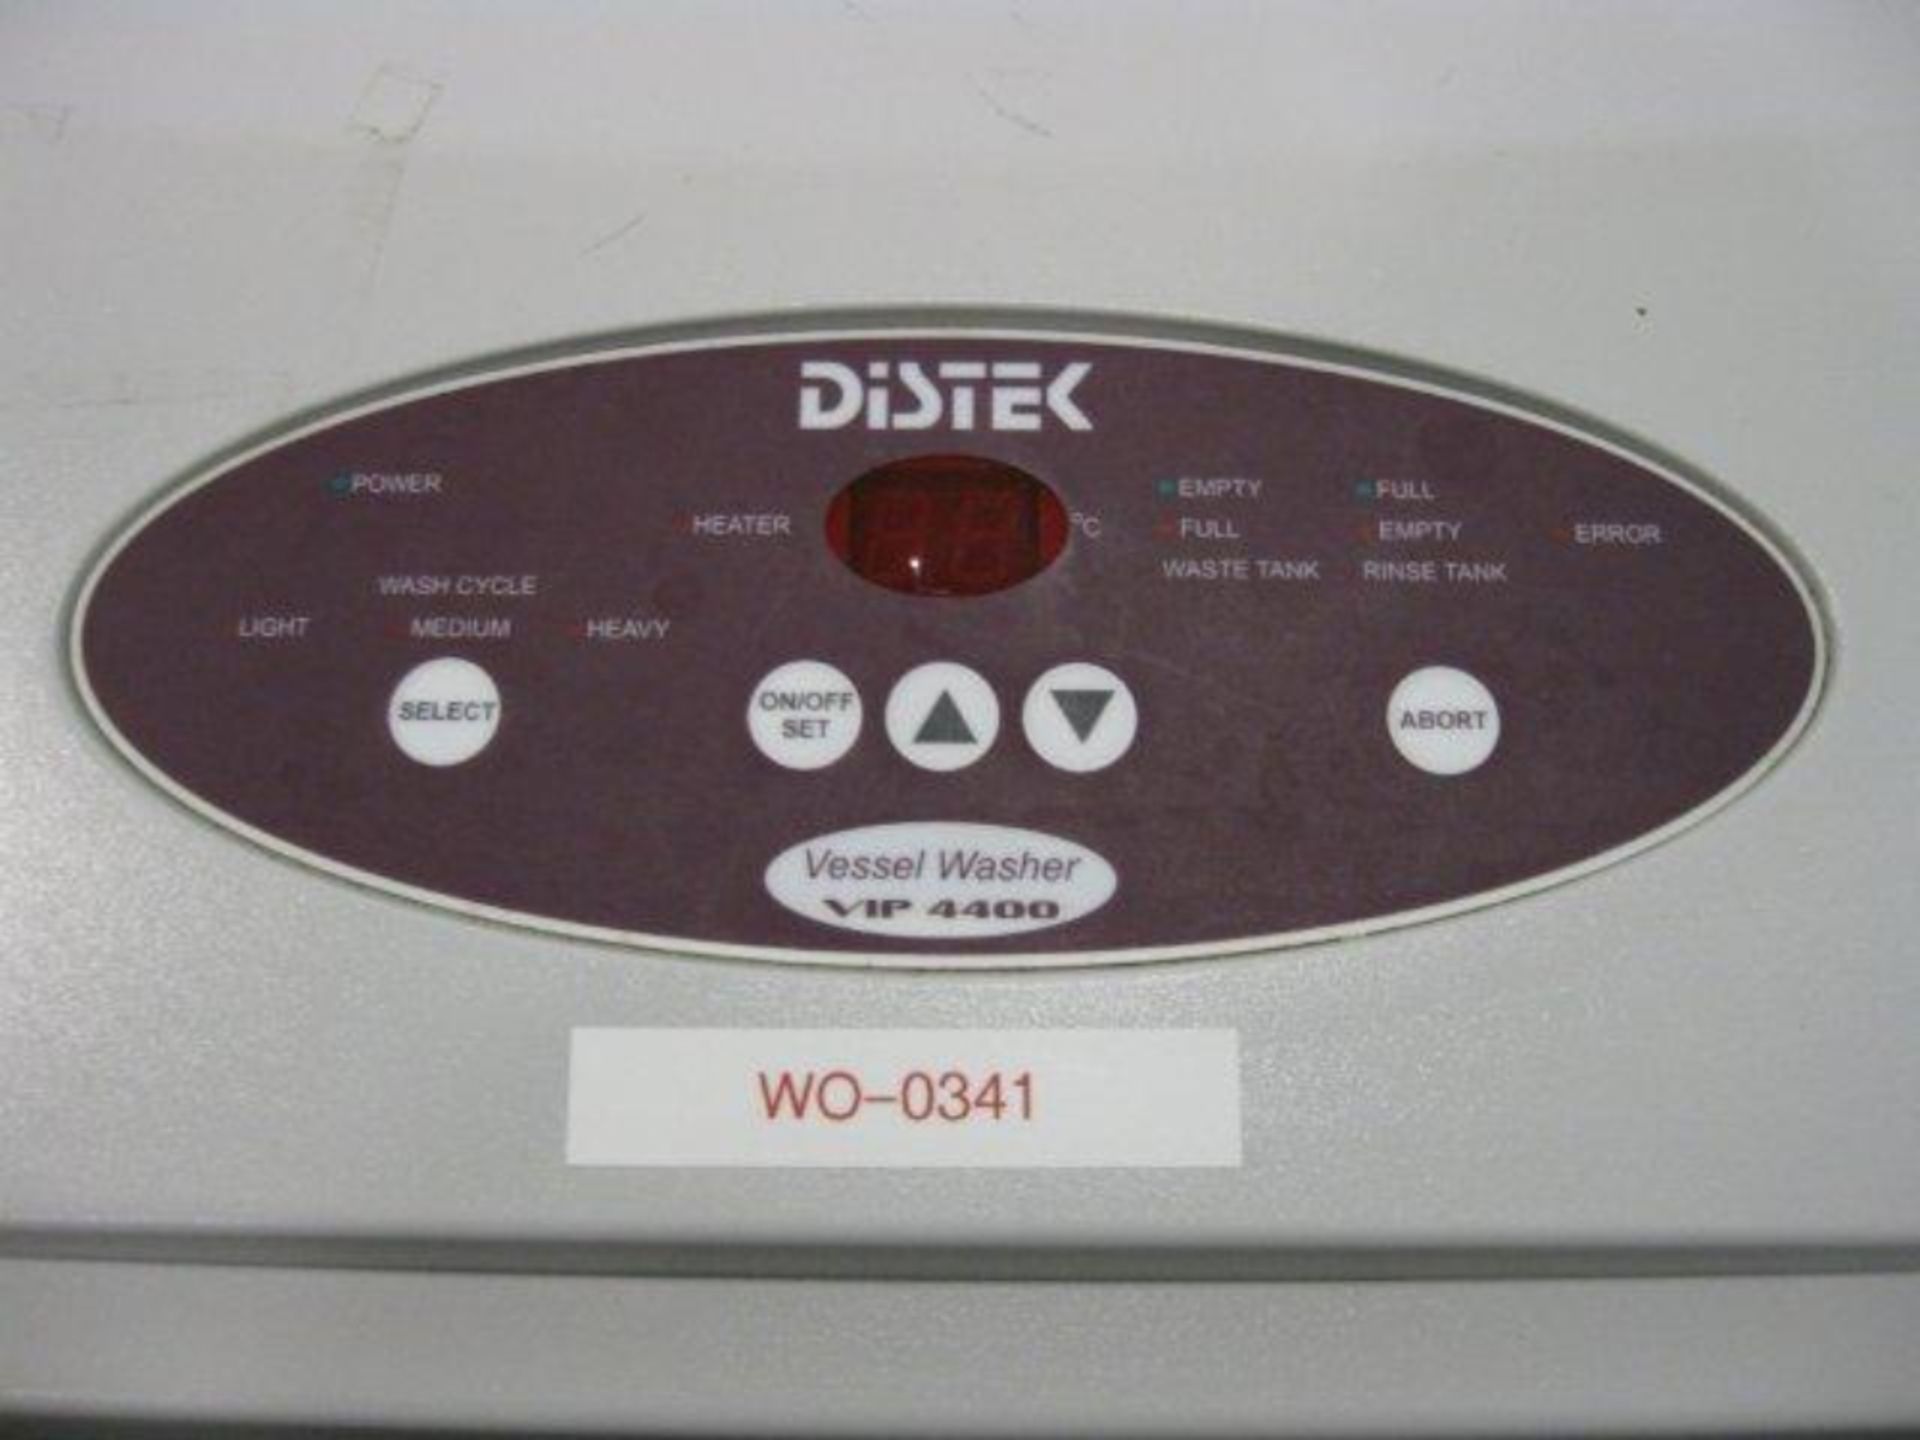 Distek VIP 4400 Vessel Washer - Image 3 of 3